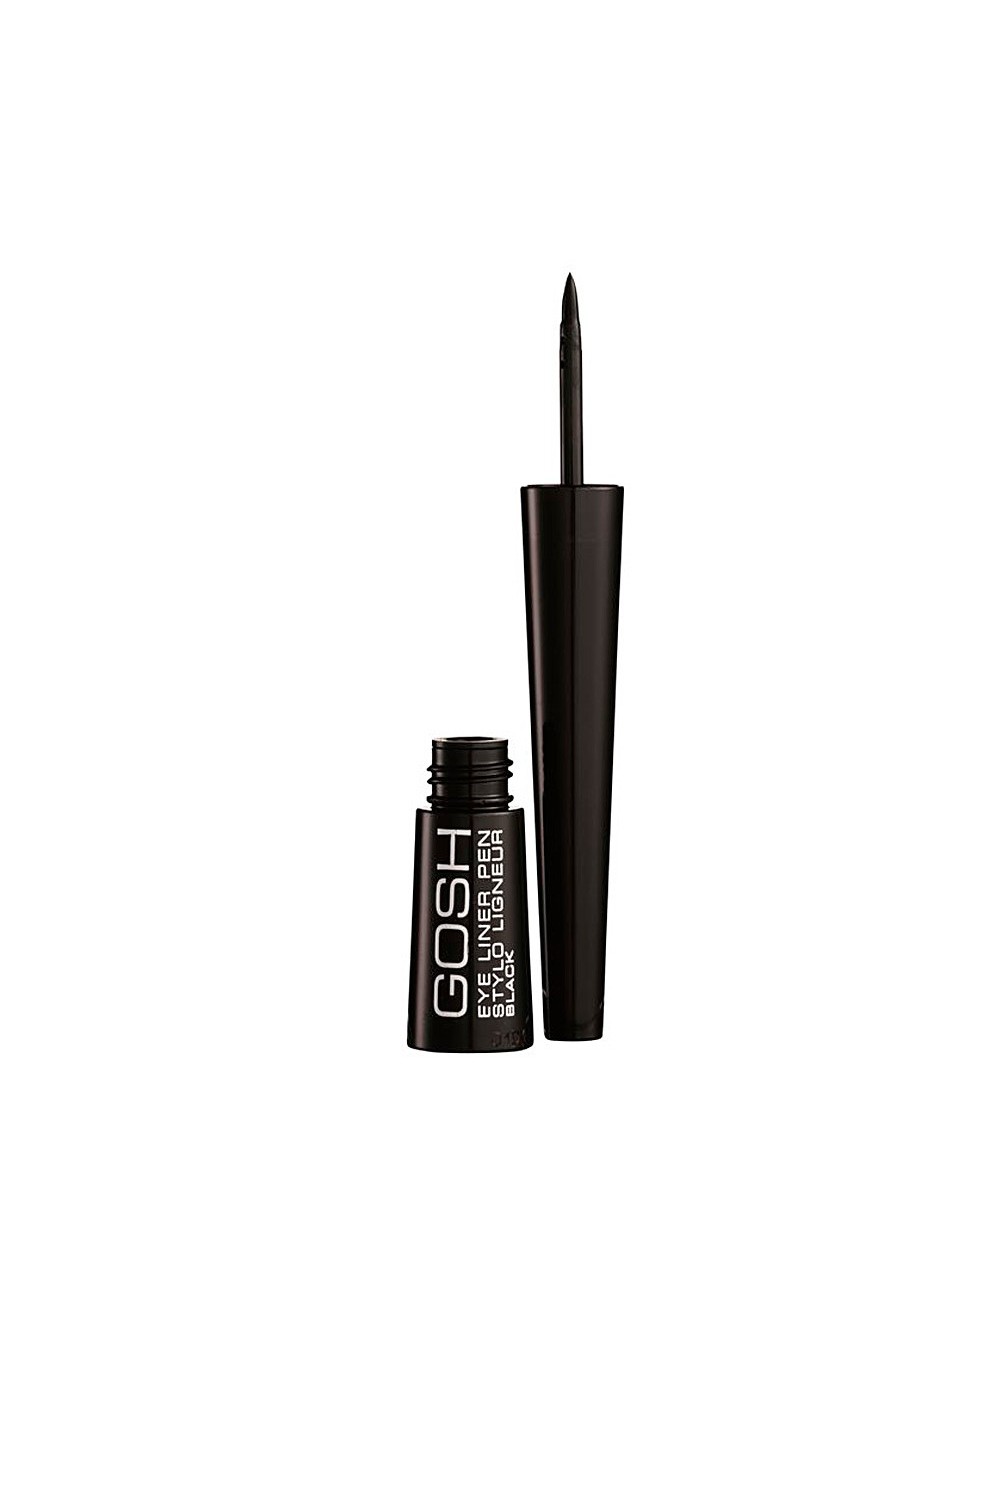 Gosh Eyeliner Pen Liquid Black 2.5g